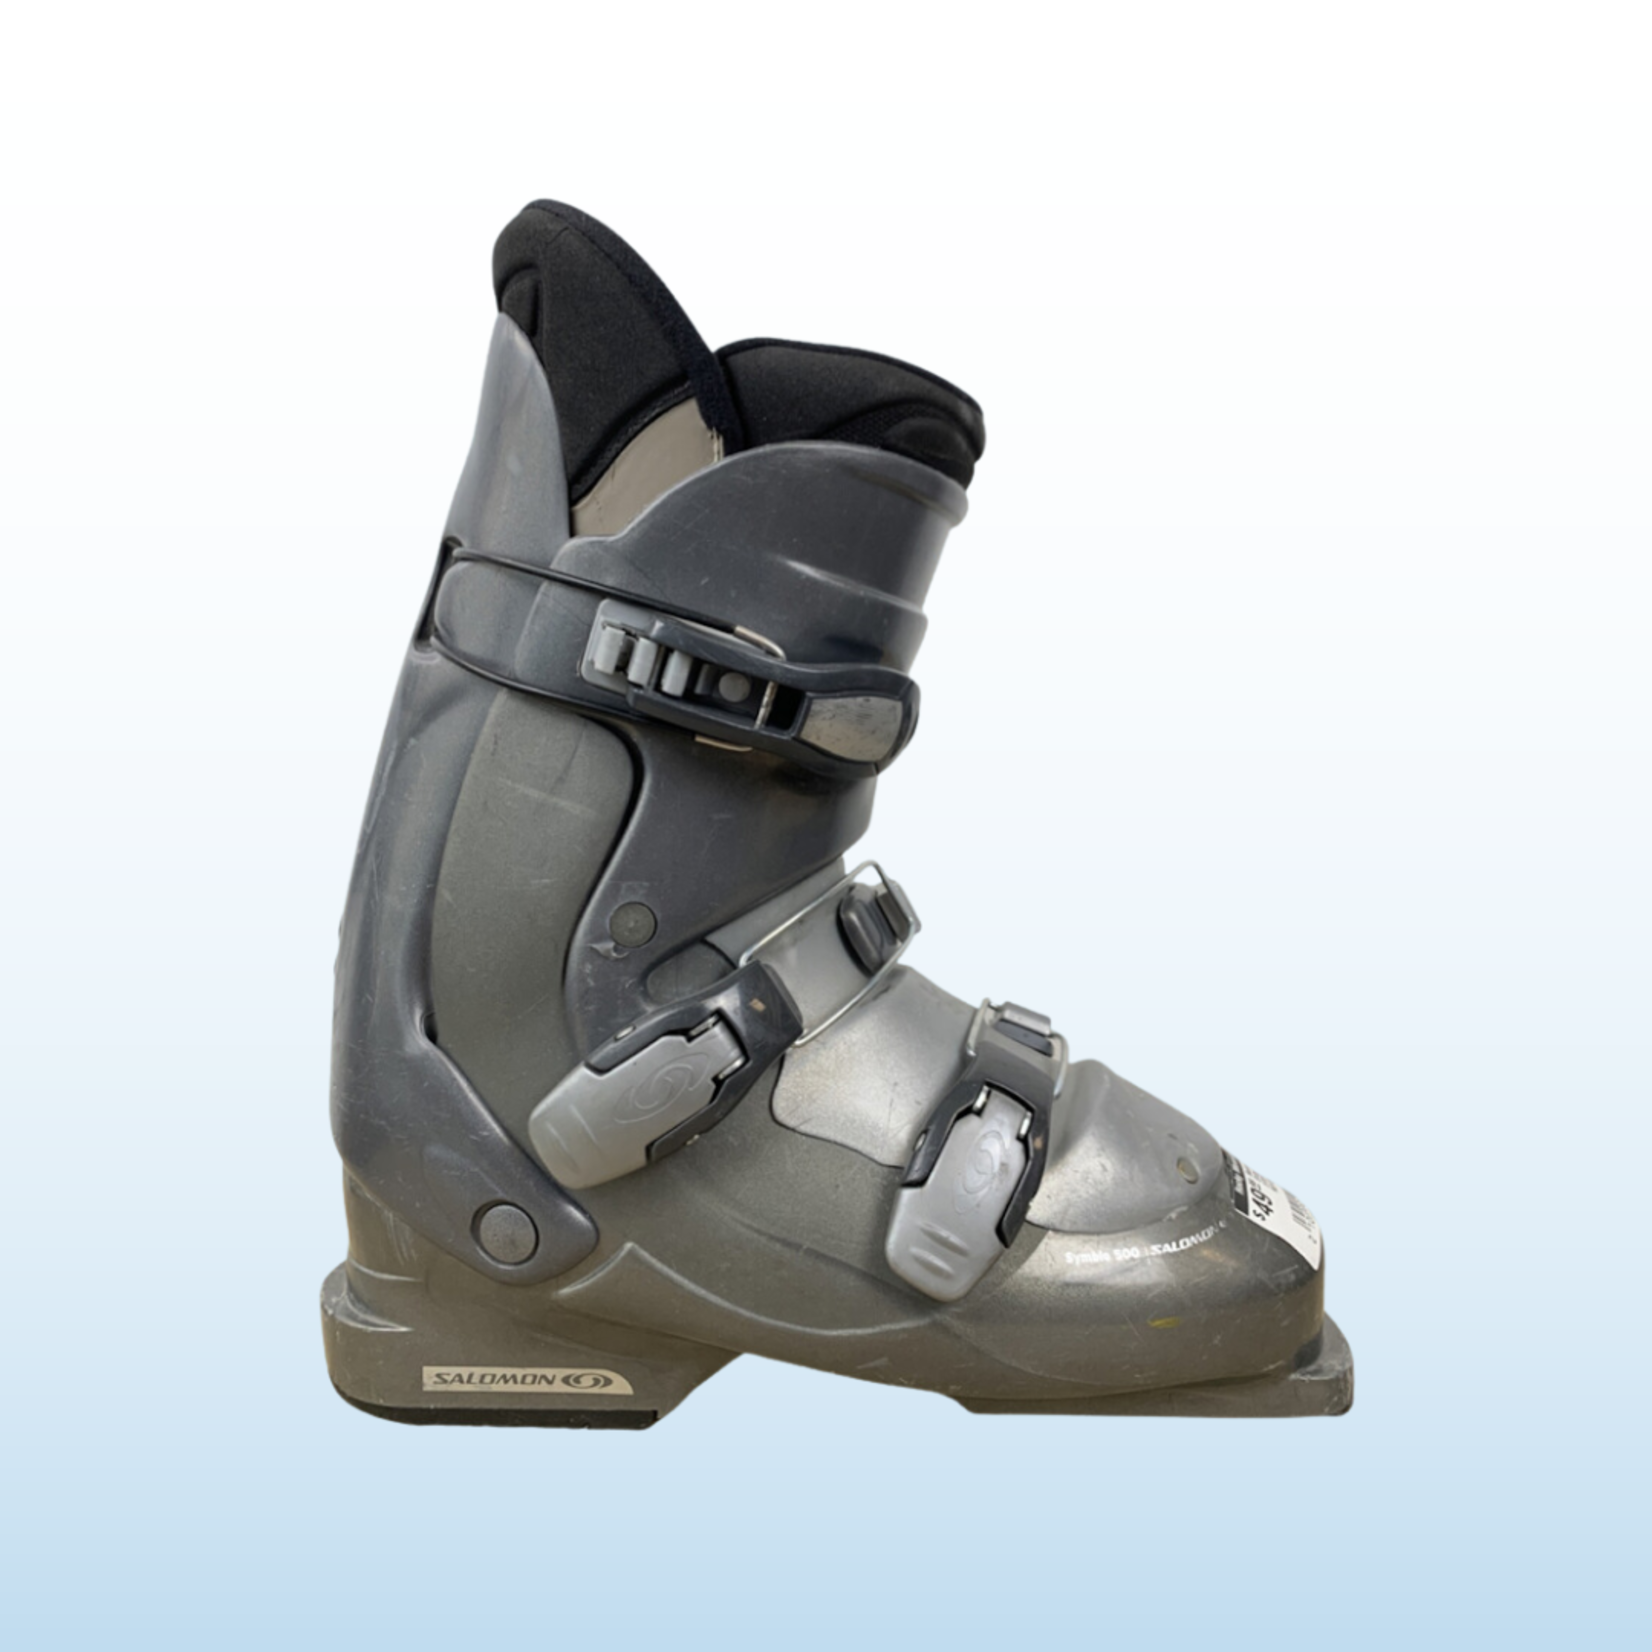 Salomon Salomon Symbio Rear Entry Ski Boots, Size 30/30.5  SOLD AS IS/NO REFUNDS/EXCHANGES